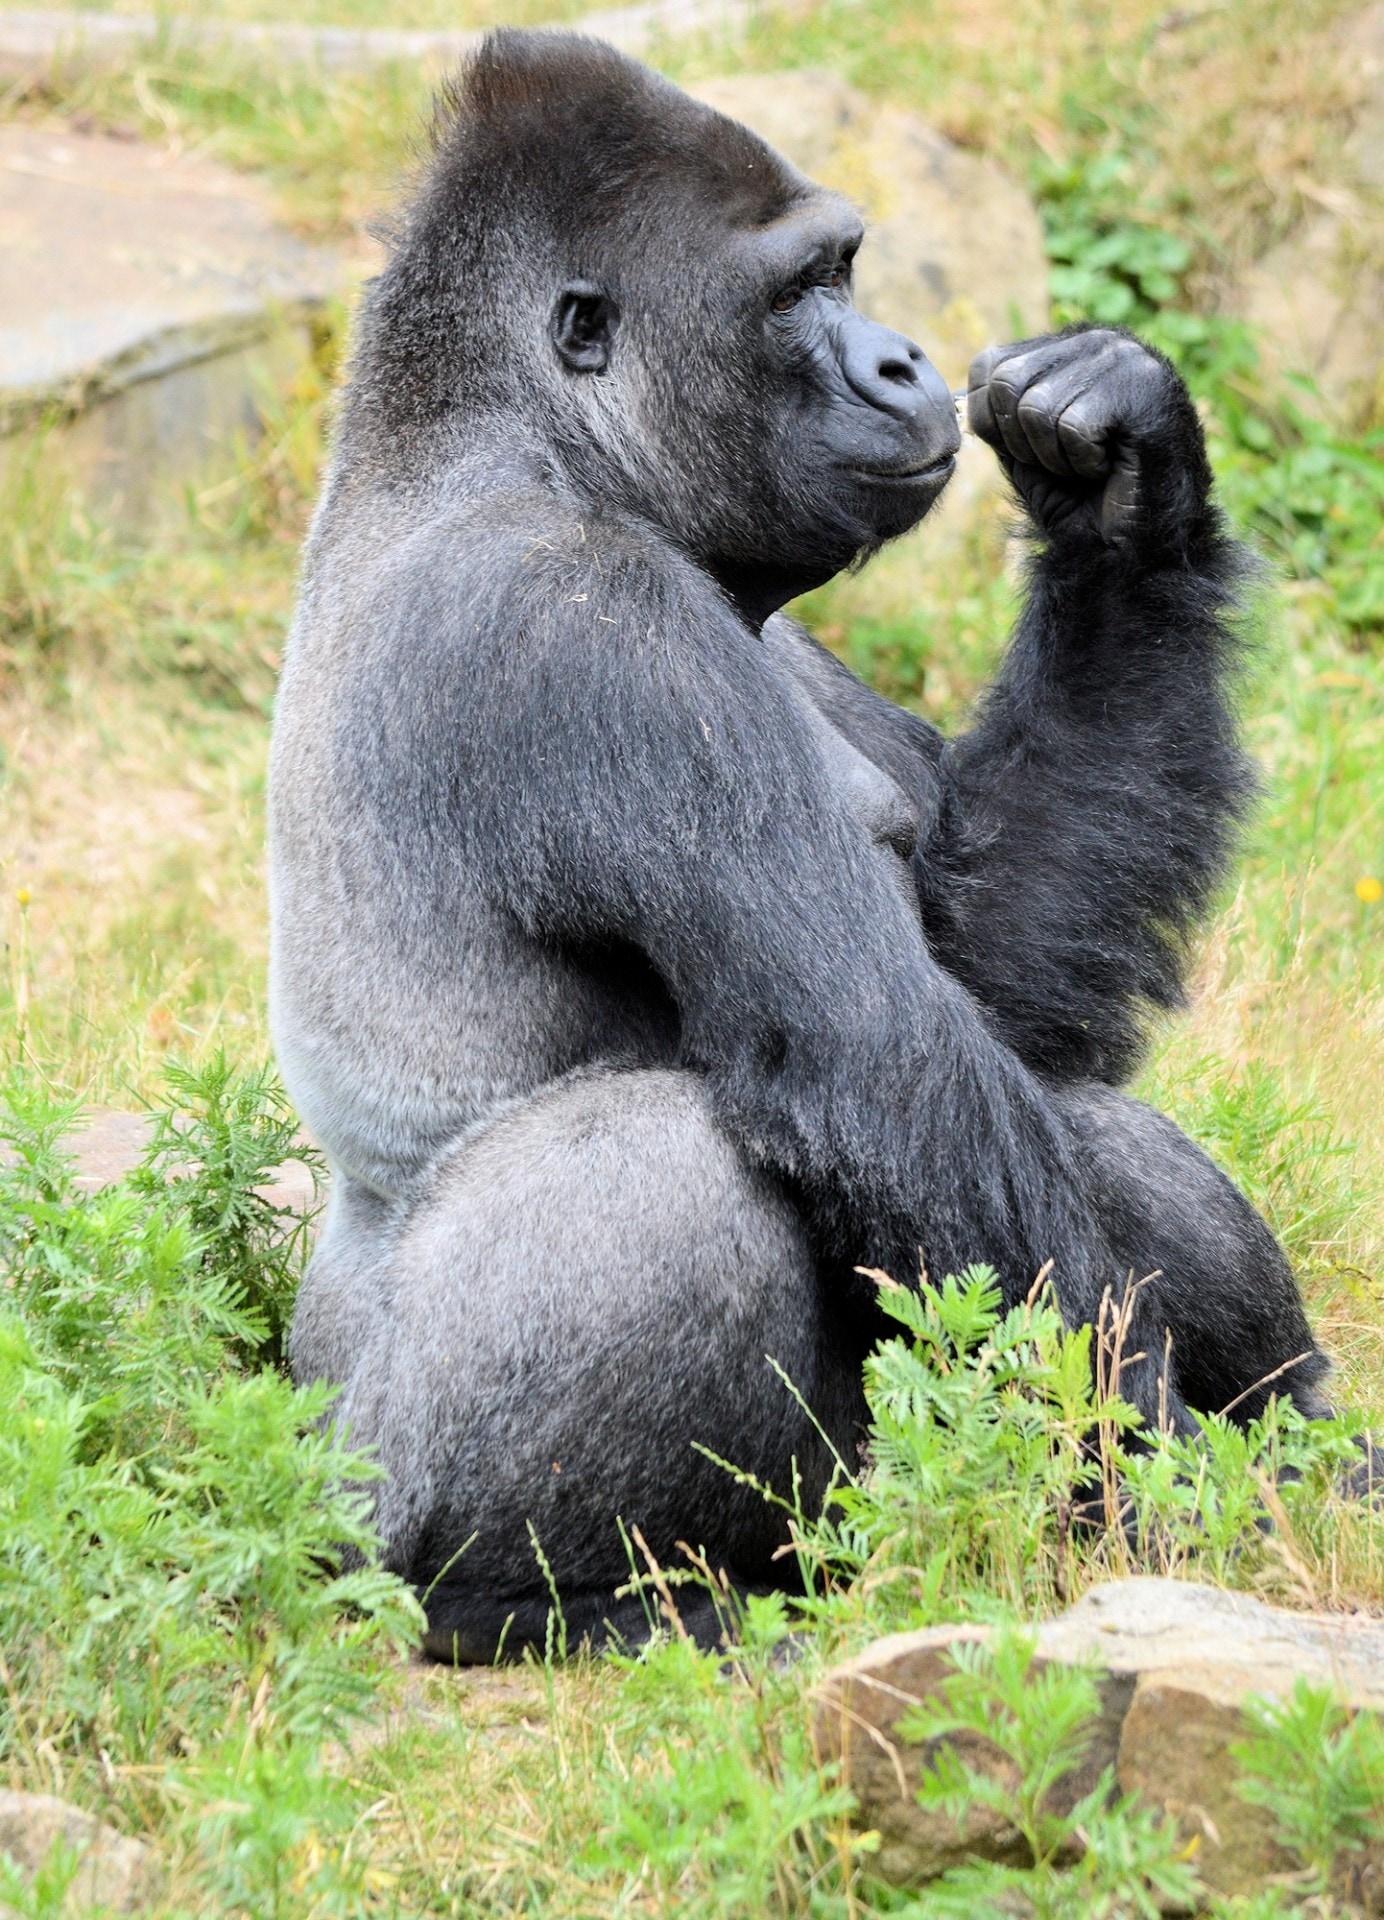 silver back Gorilla sitting on grass field near stone during daytime